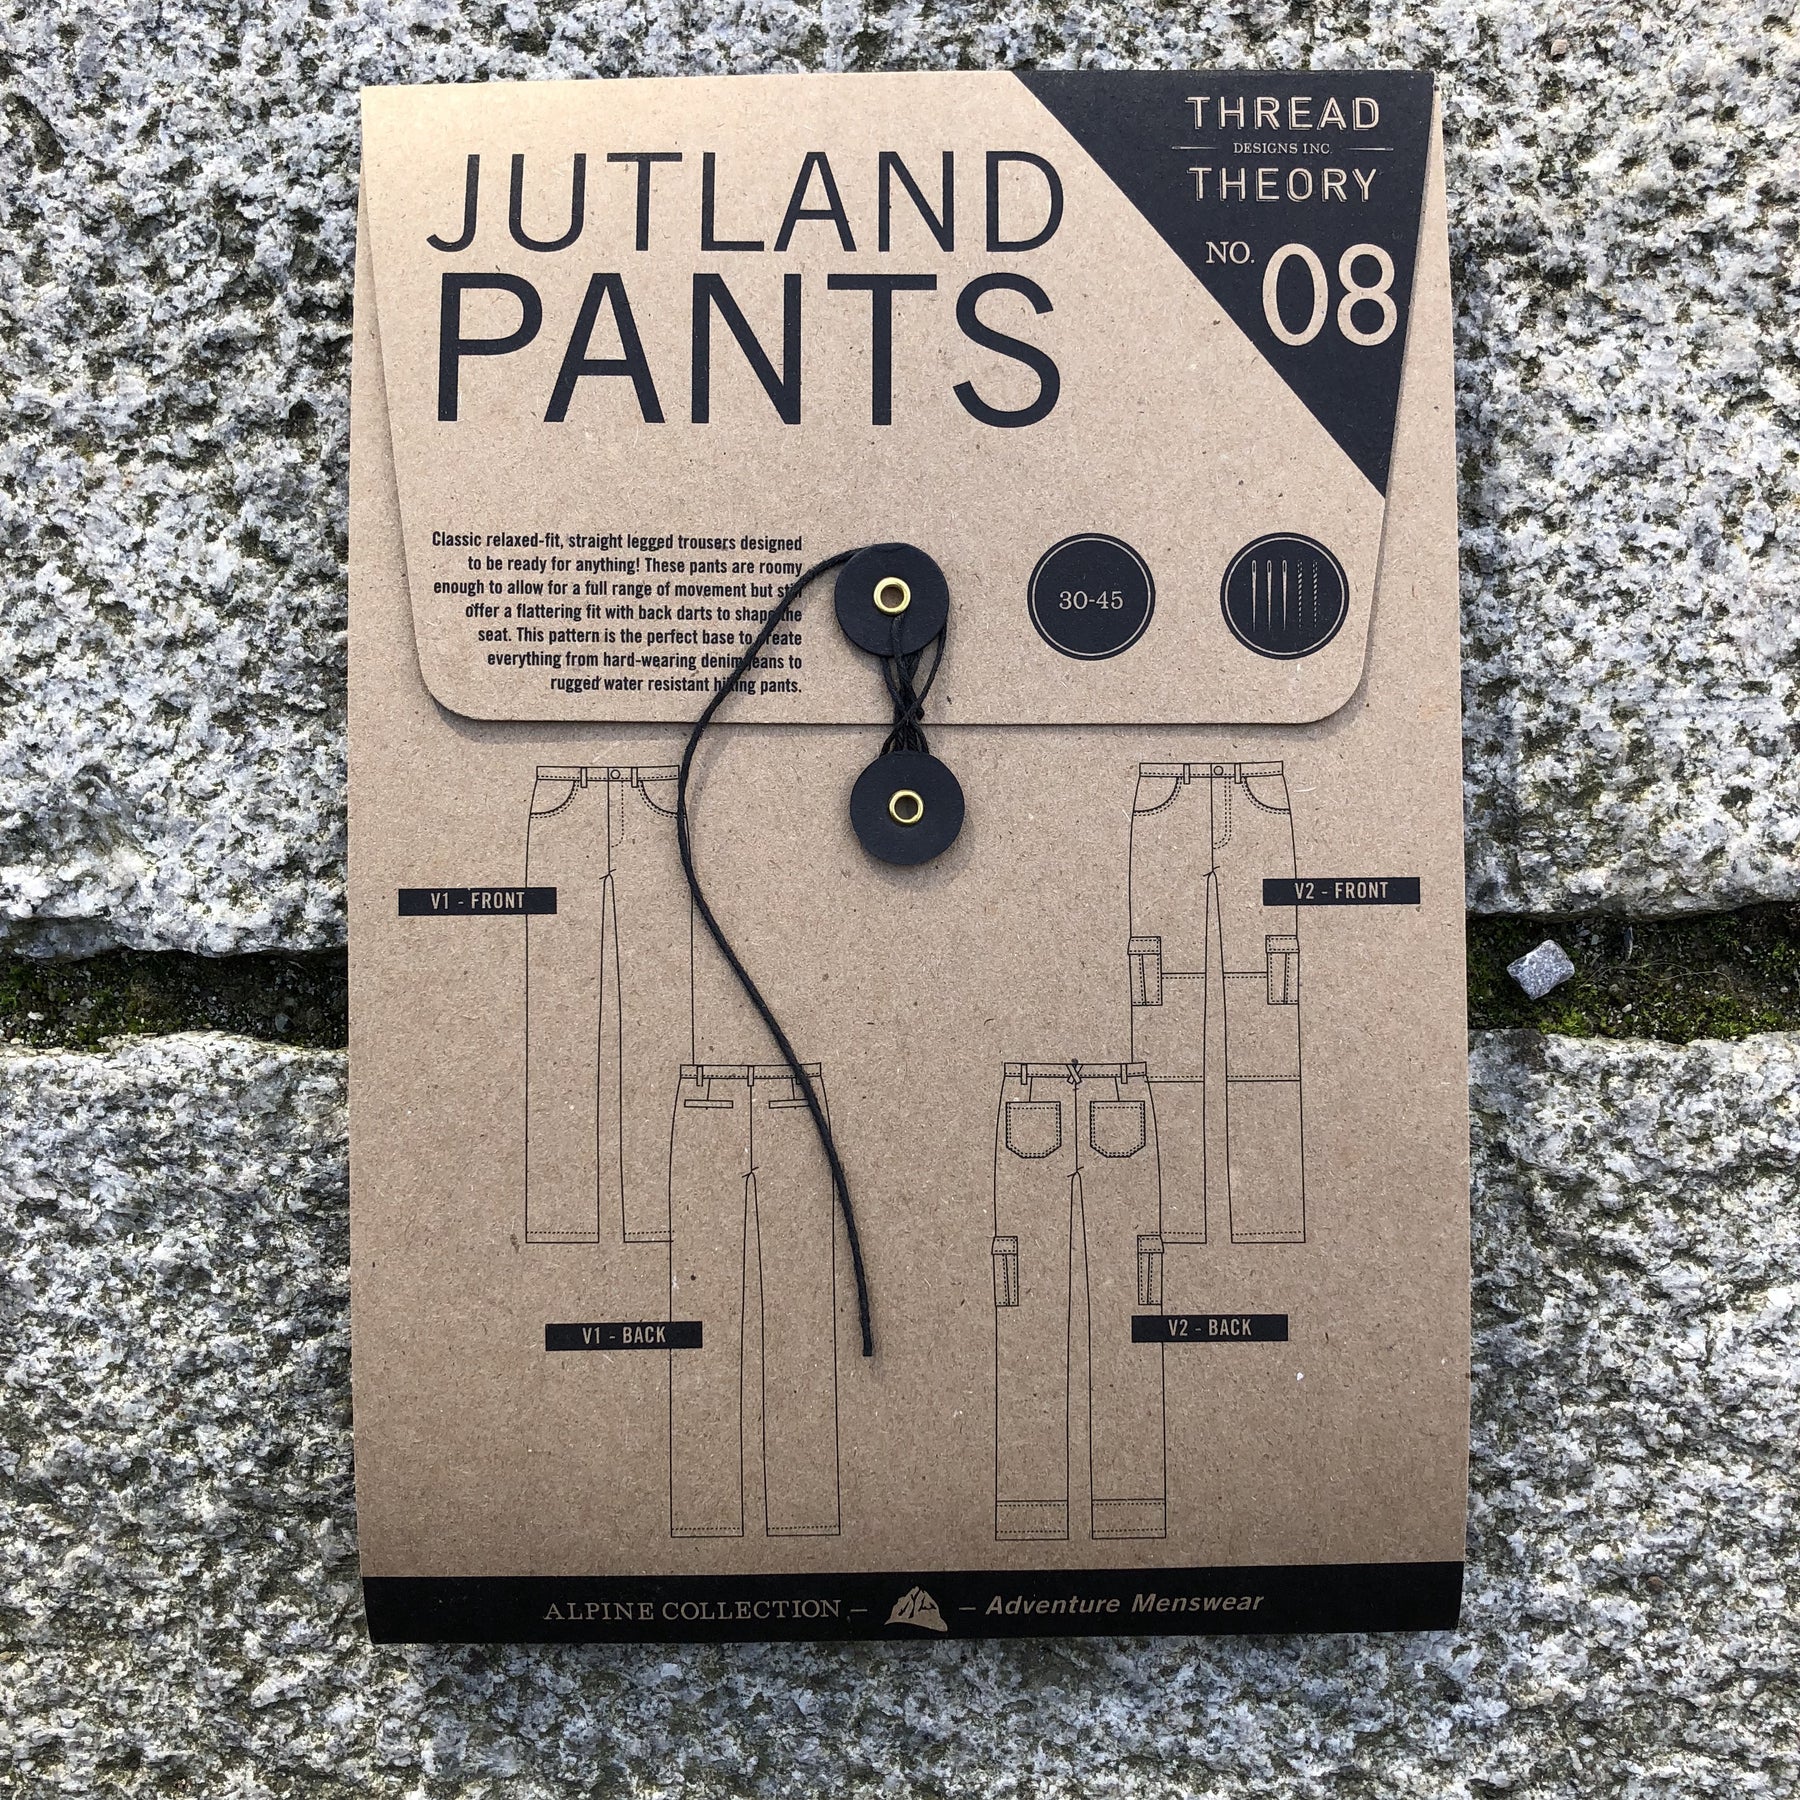 Thread Theory Jutland Pants